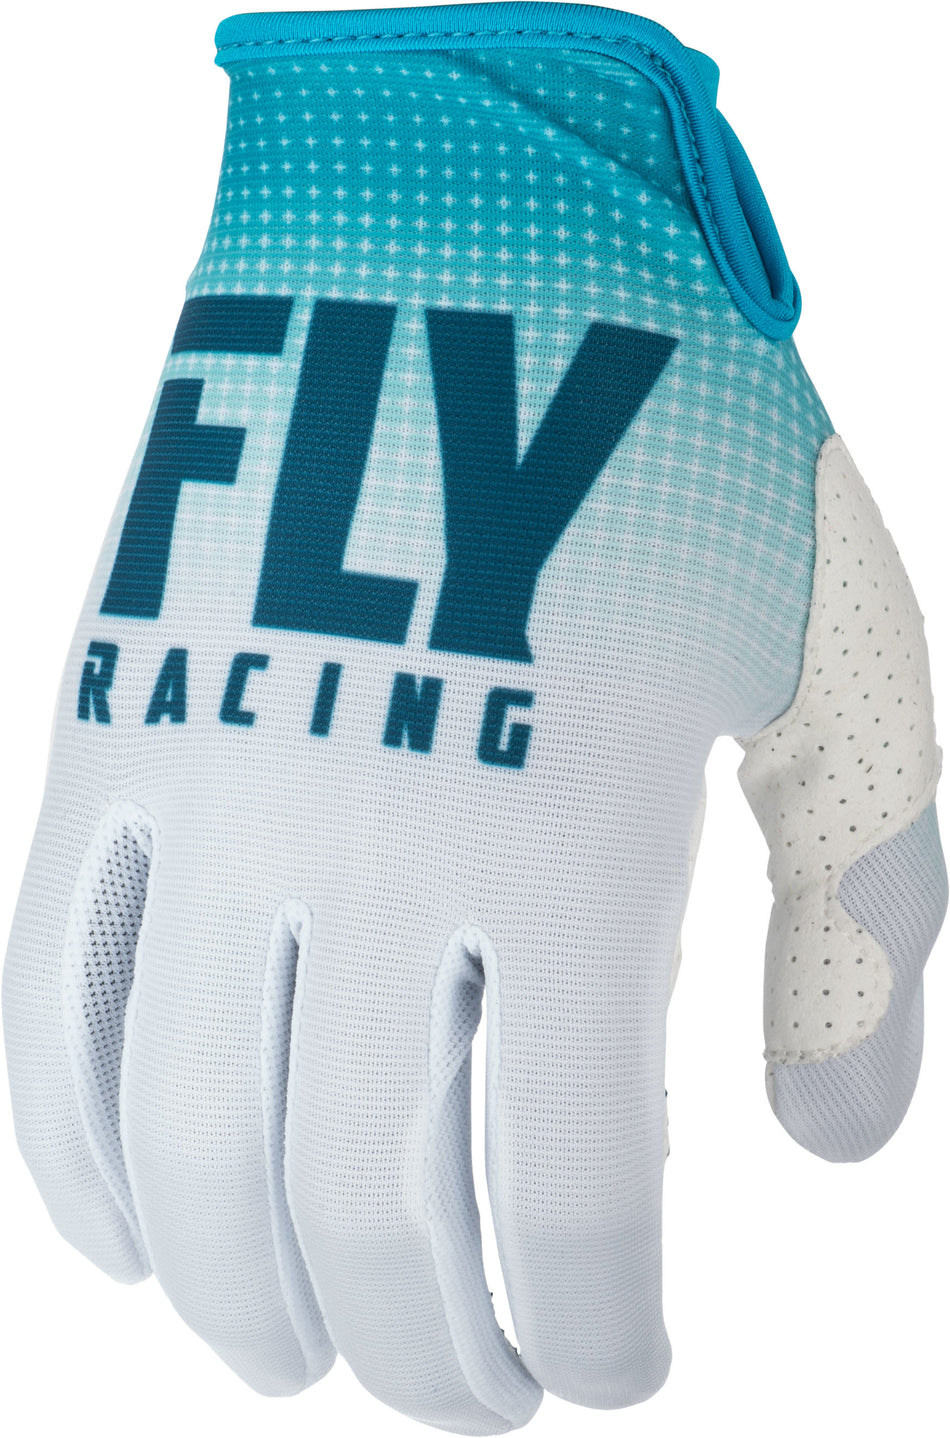 FLY RACING Lite Gloves Blue/White Sz 10 372-01110